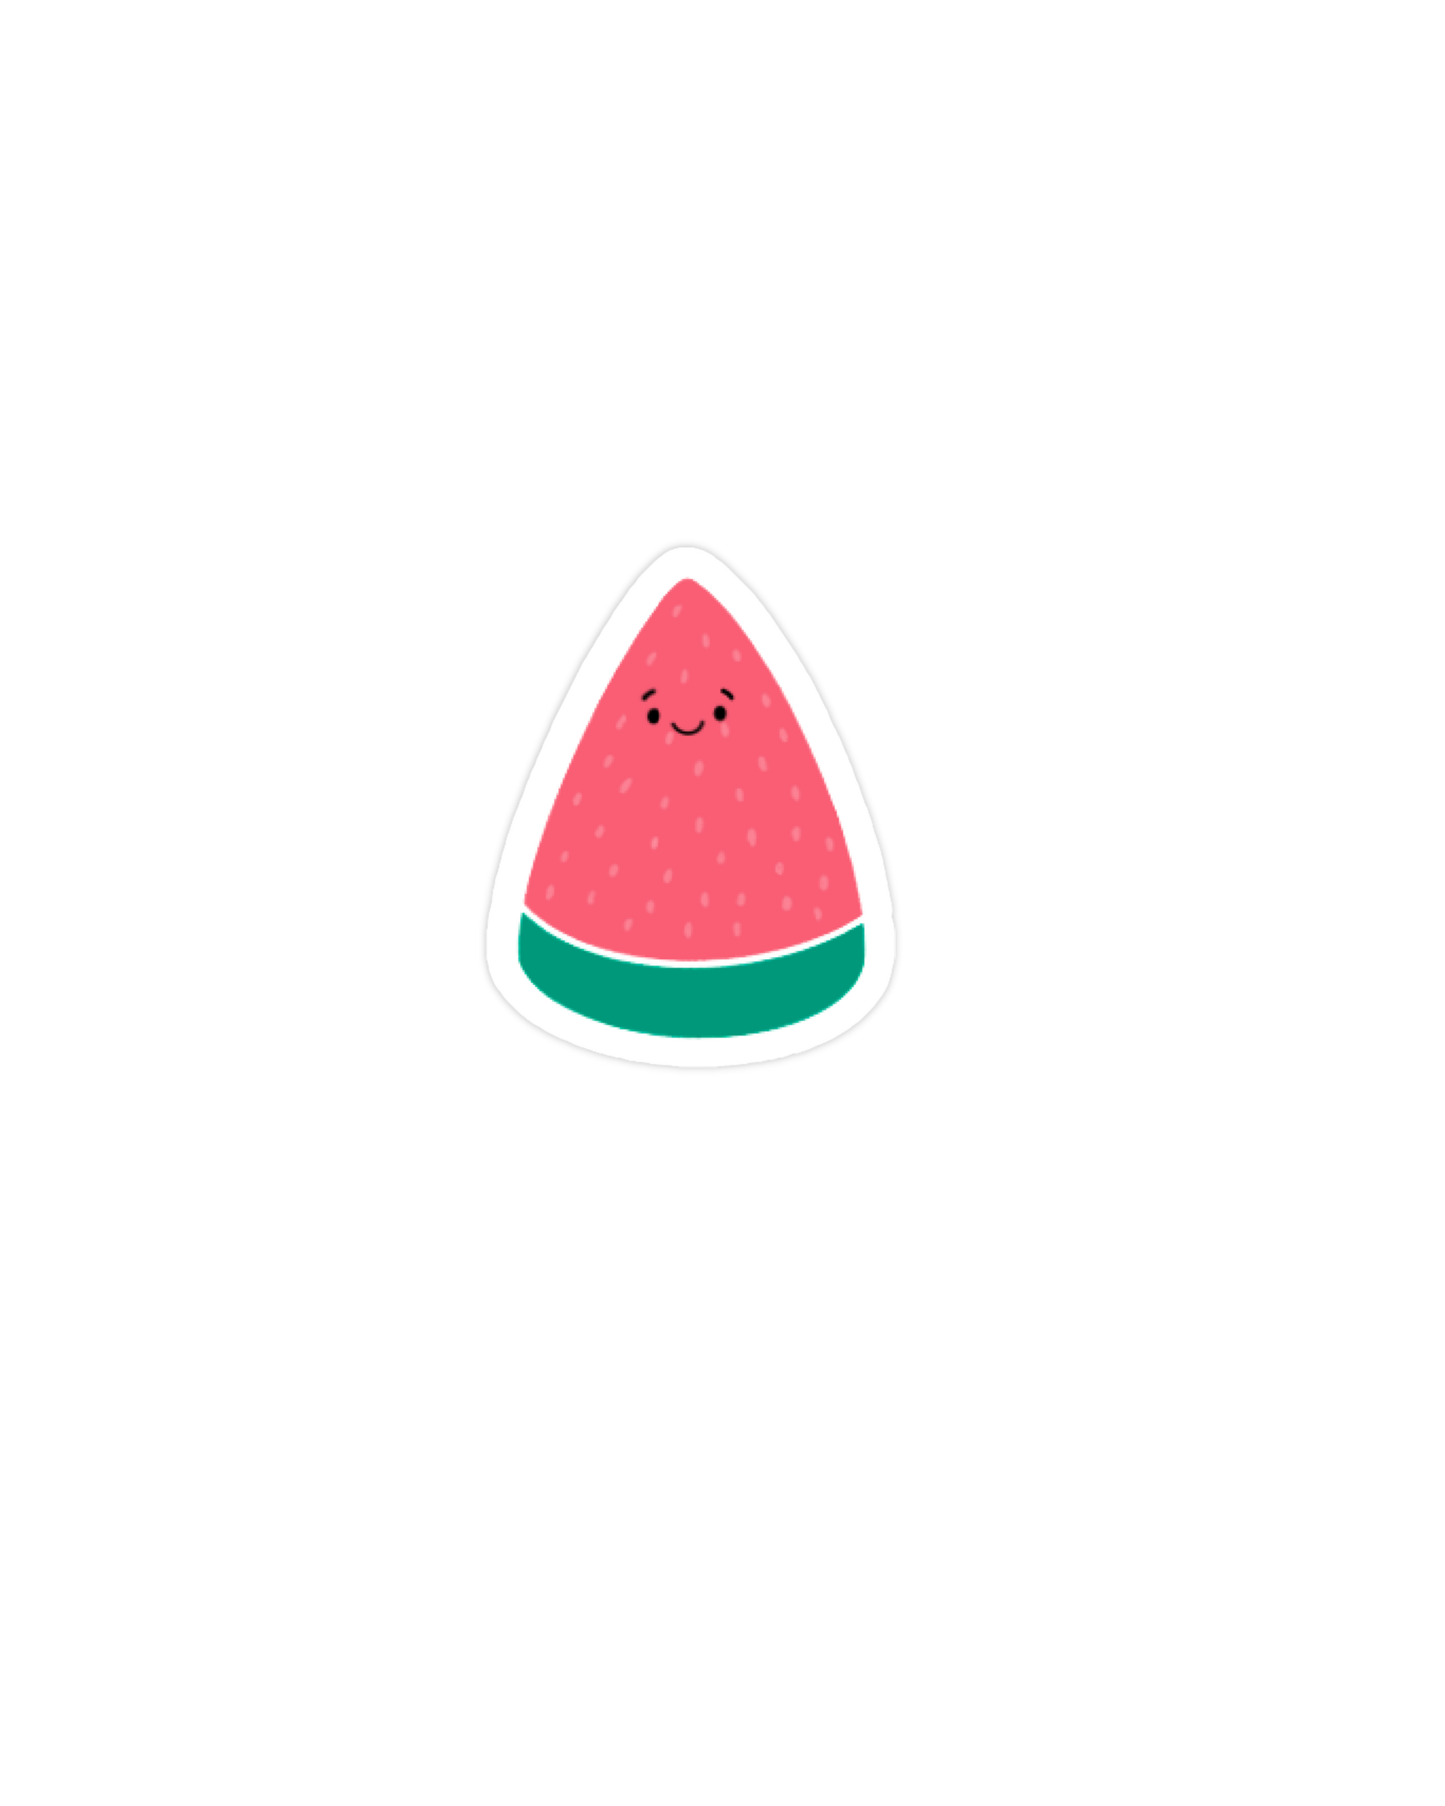 Cute watermelon vinyl sticker